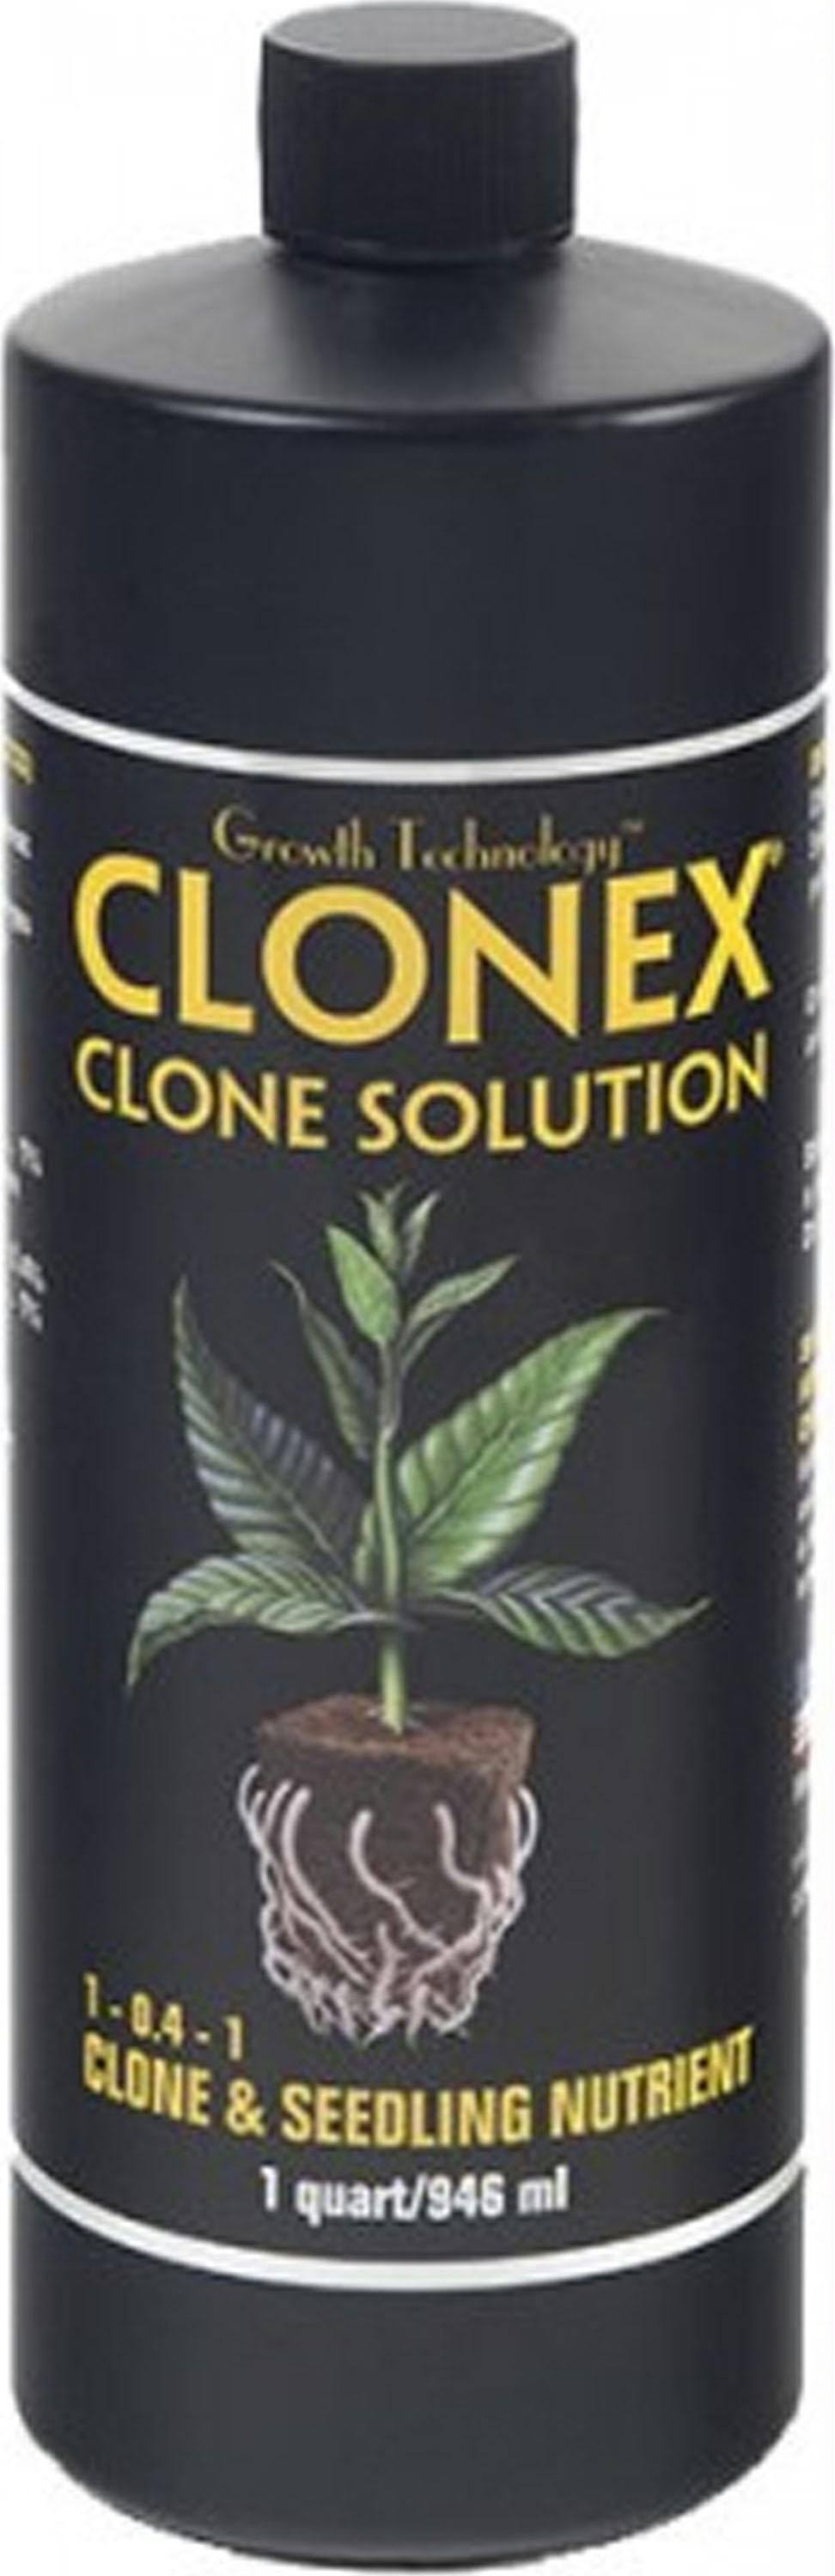 Clonex Clone Solution - Clone and Seedling Nutrient, 1 Quart